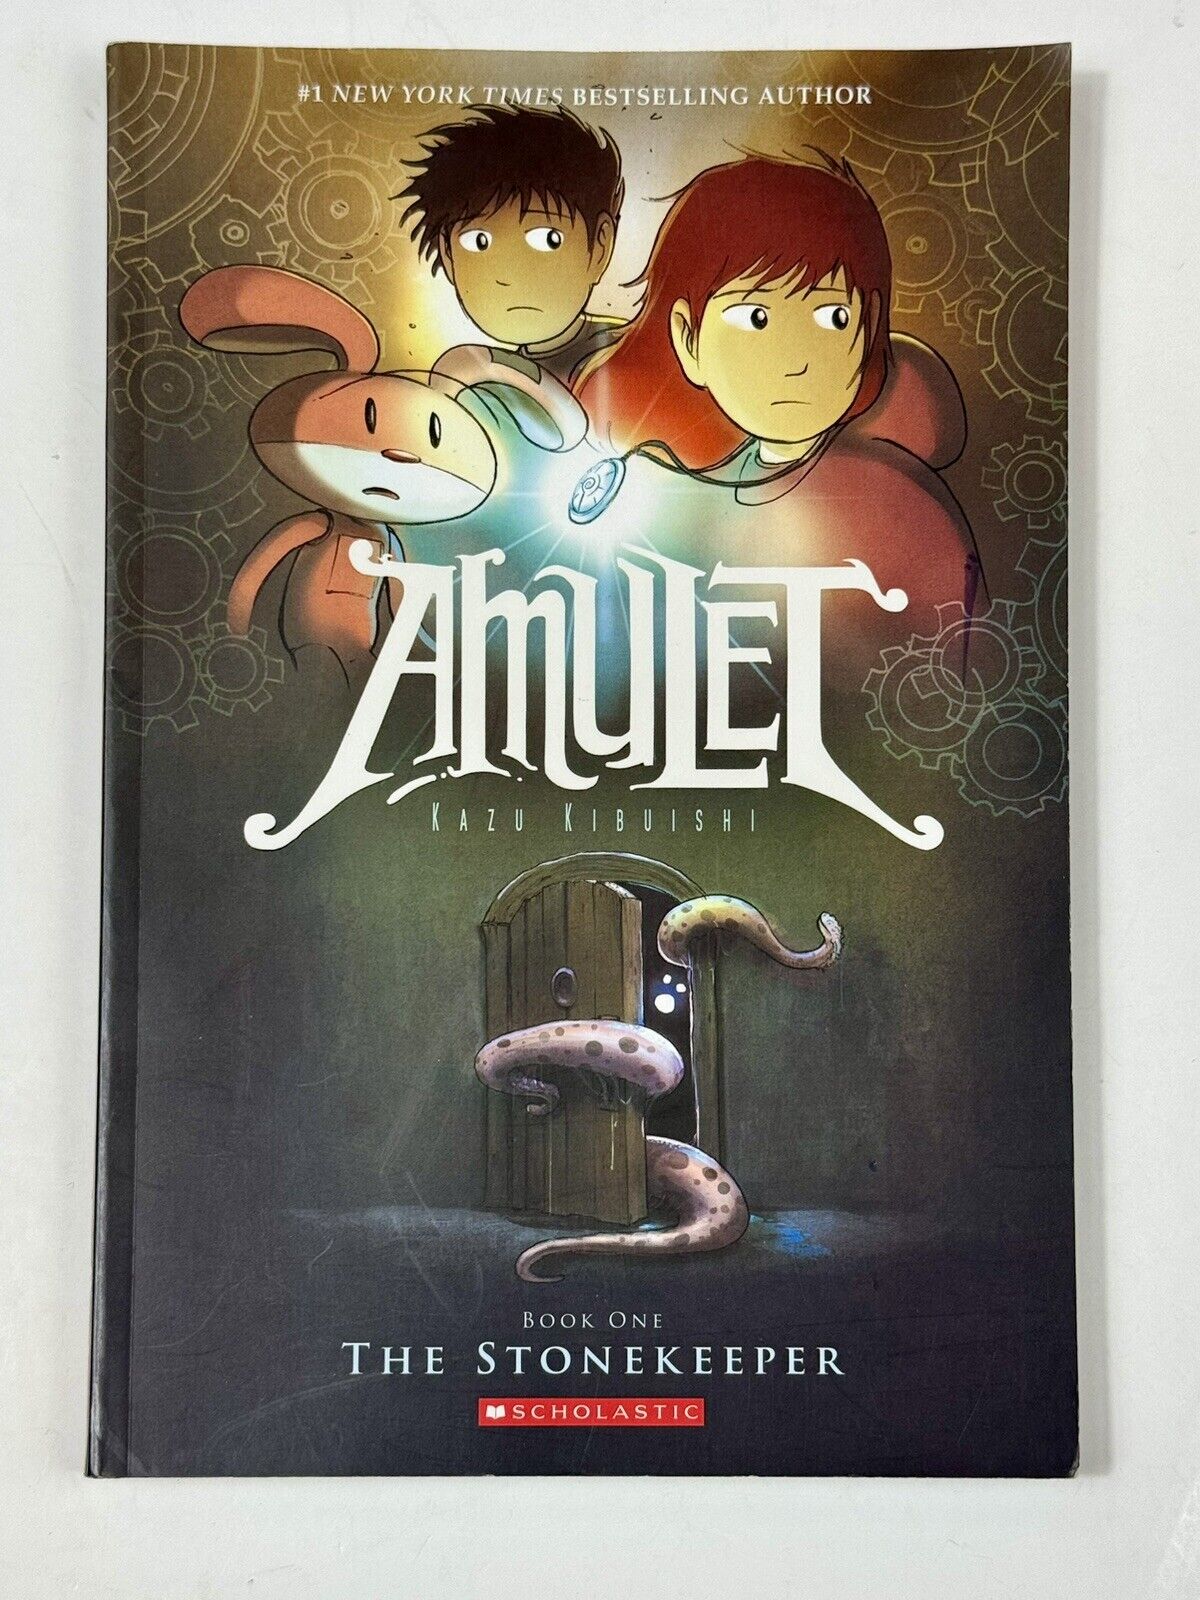 Amulet The Stonekeeper: A Graphic Novel Book One by Kazu Kibuishi